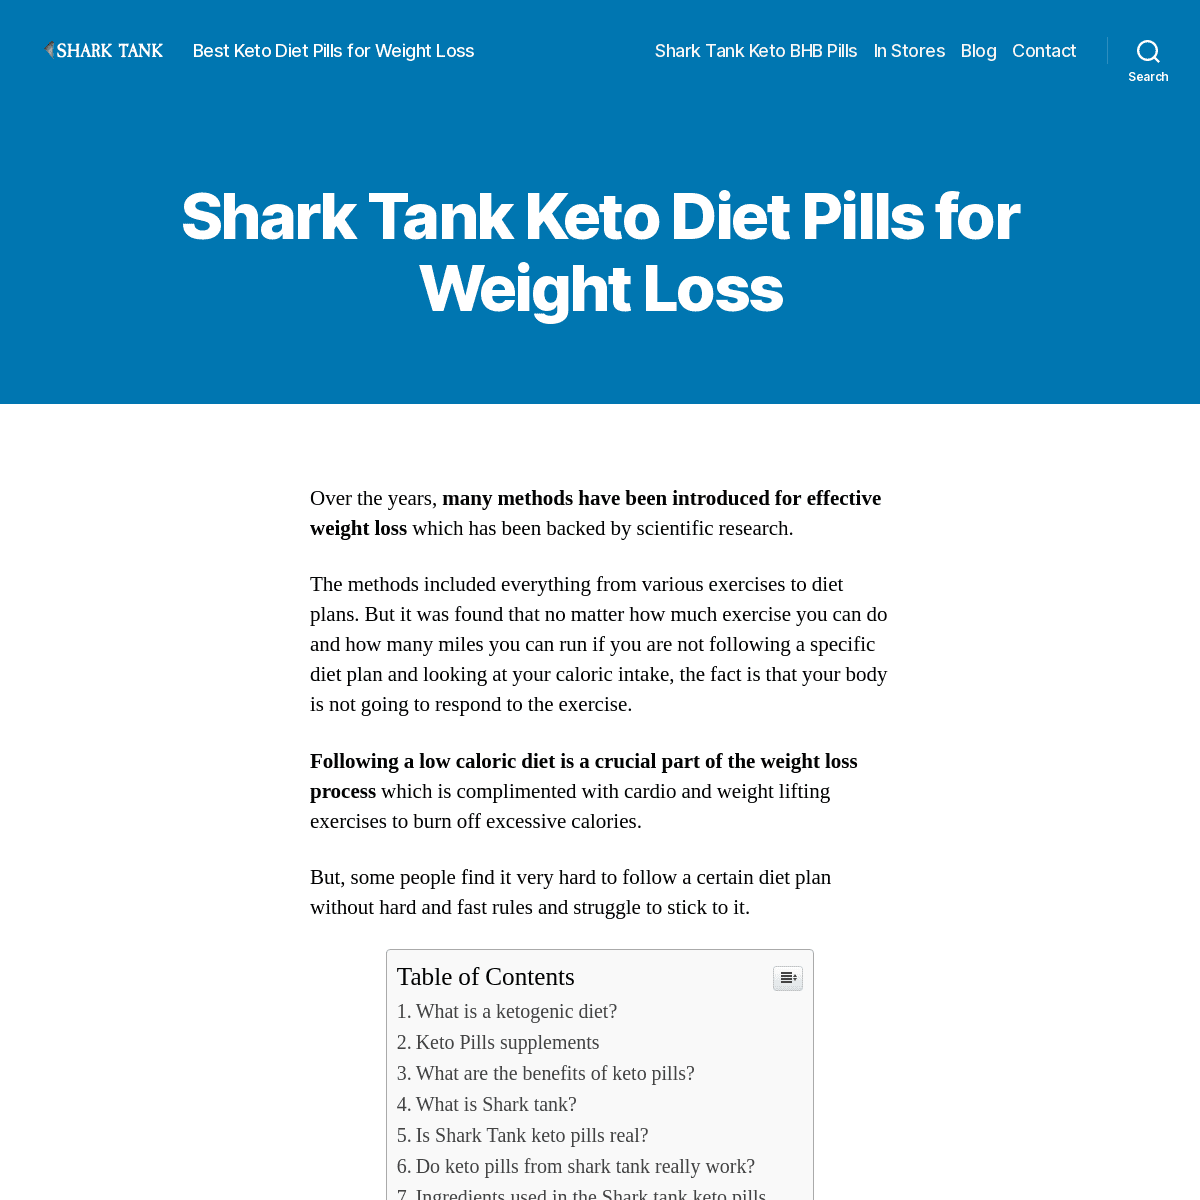 A complete backup of https://sharktankketopills.com